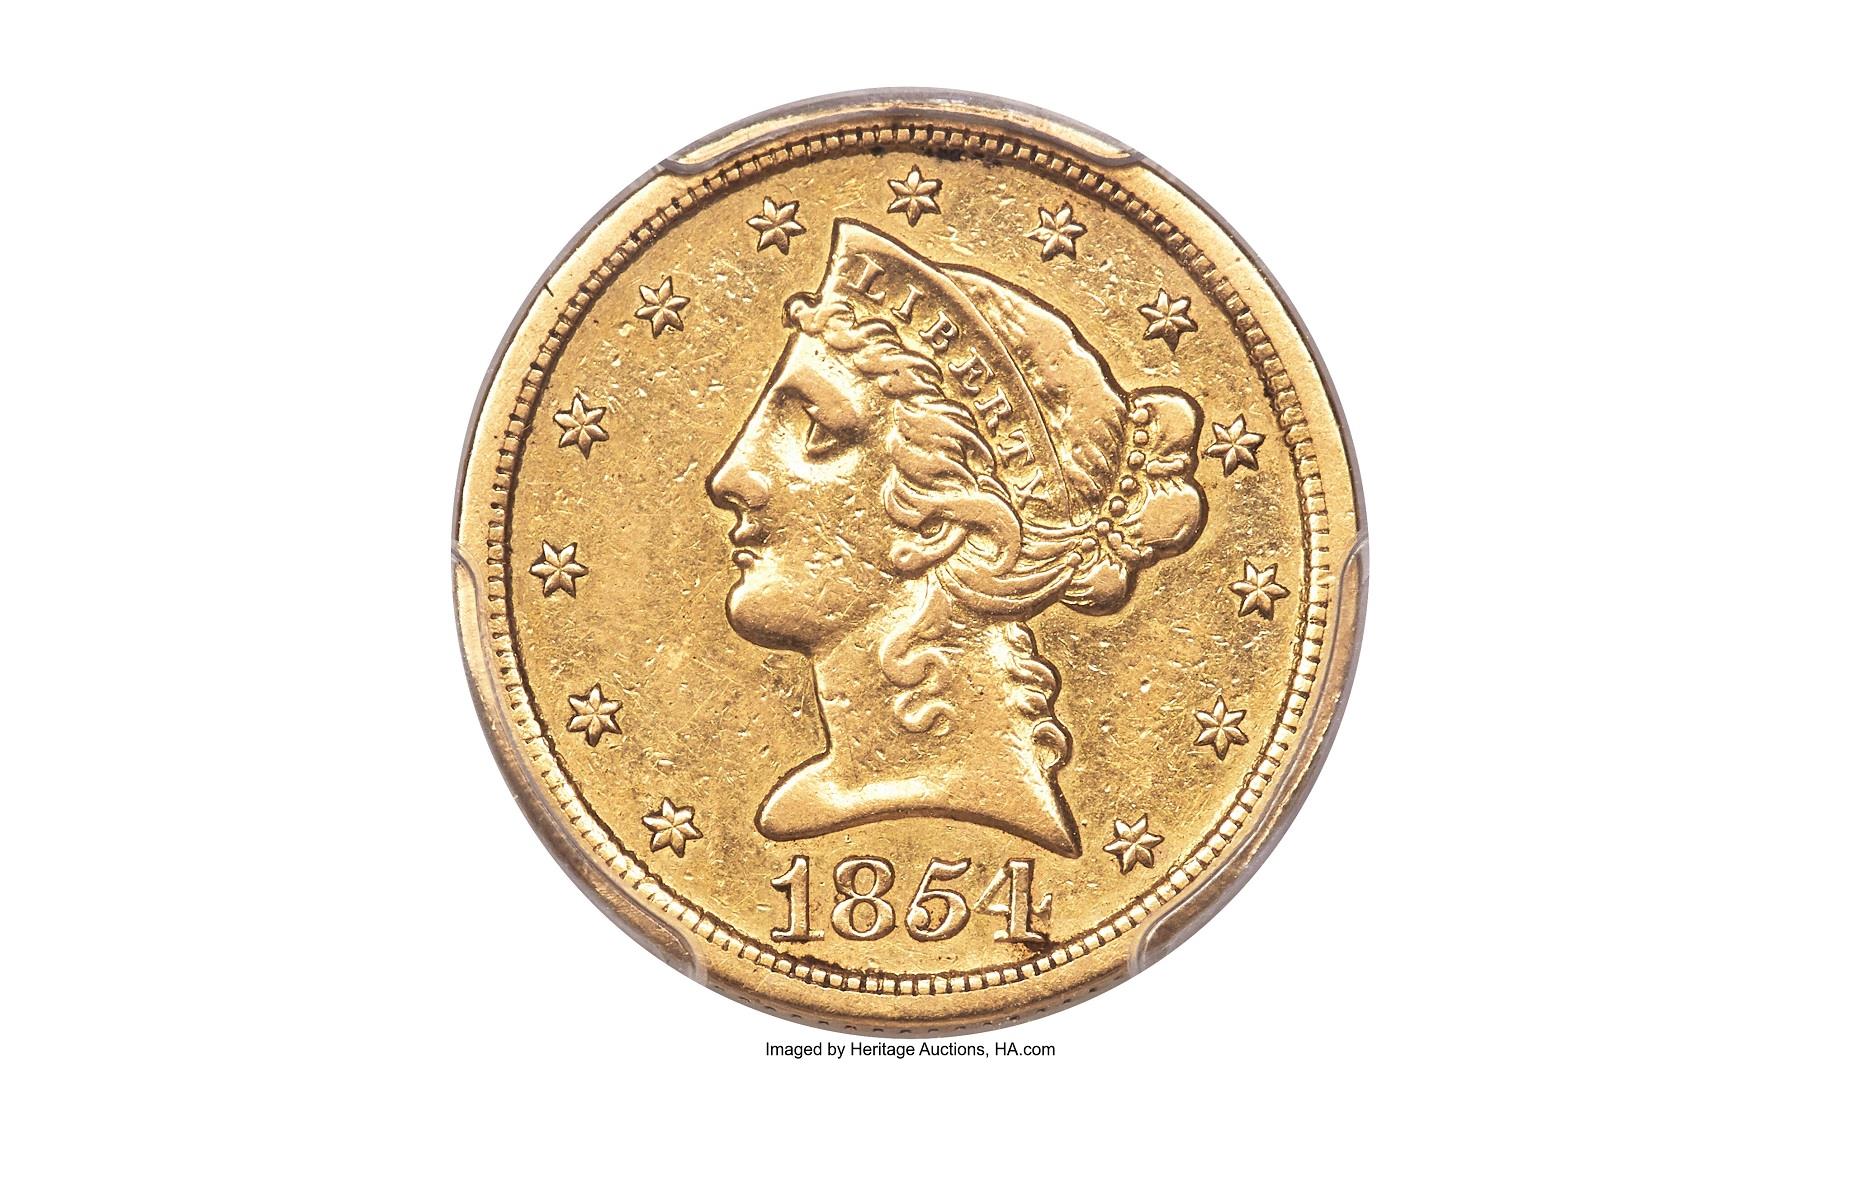 1854-S Liberty Half Eagle: $2.4 million